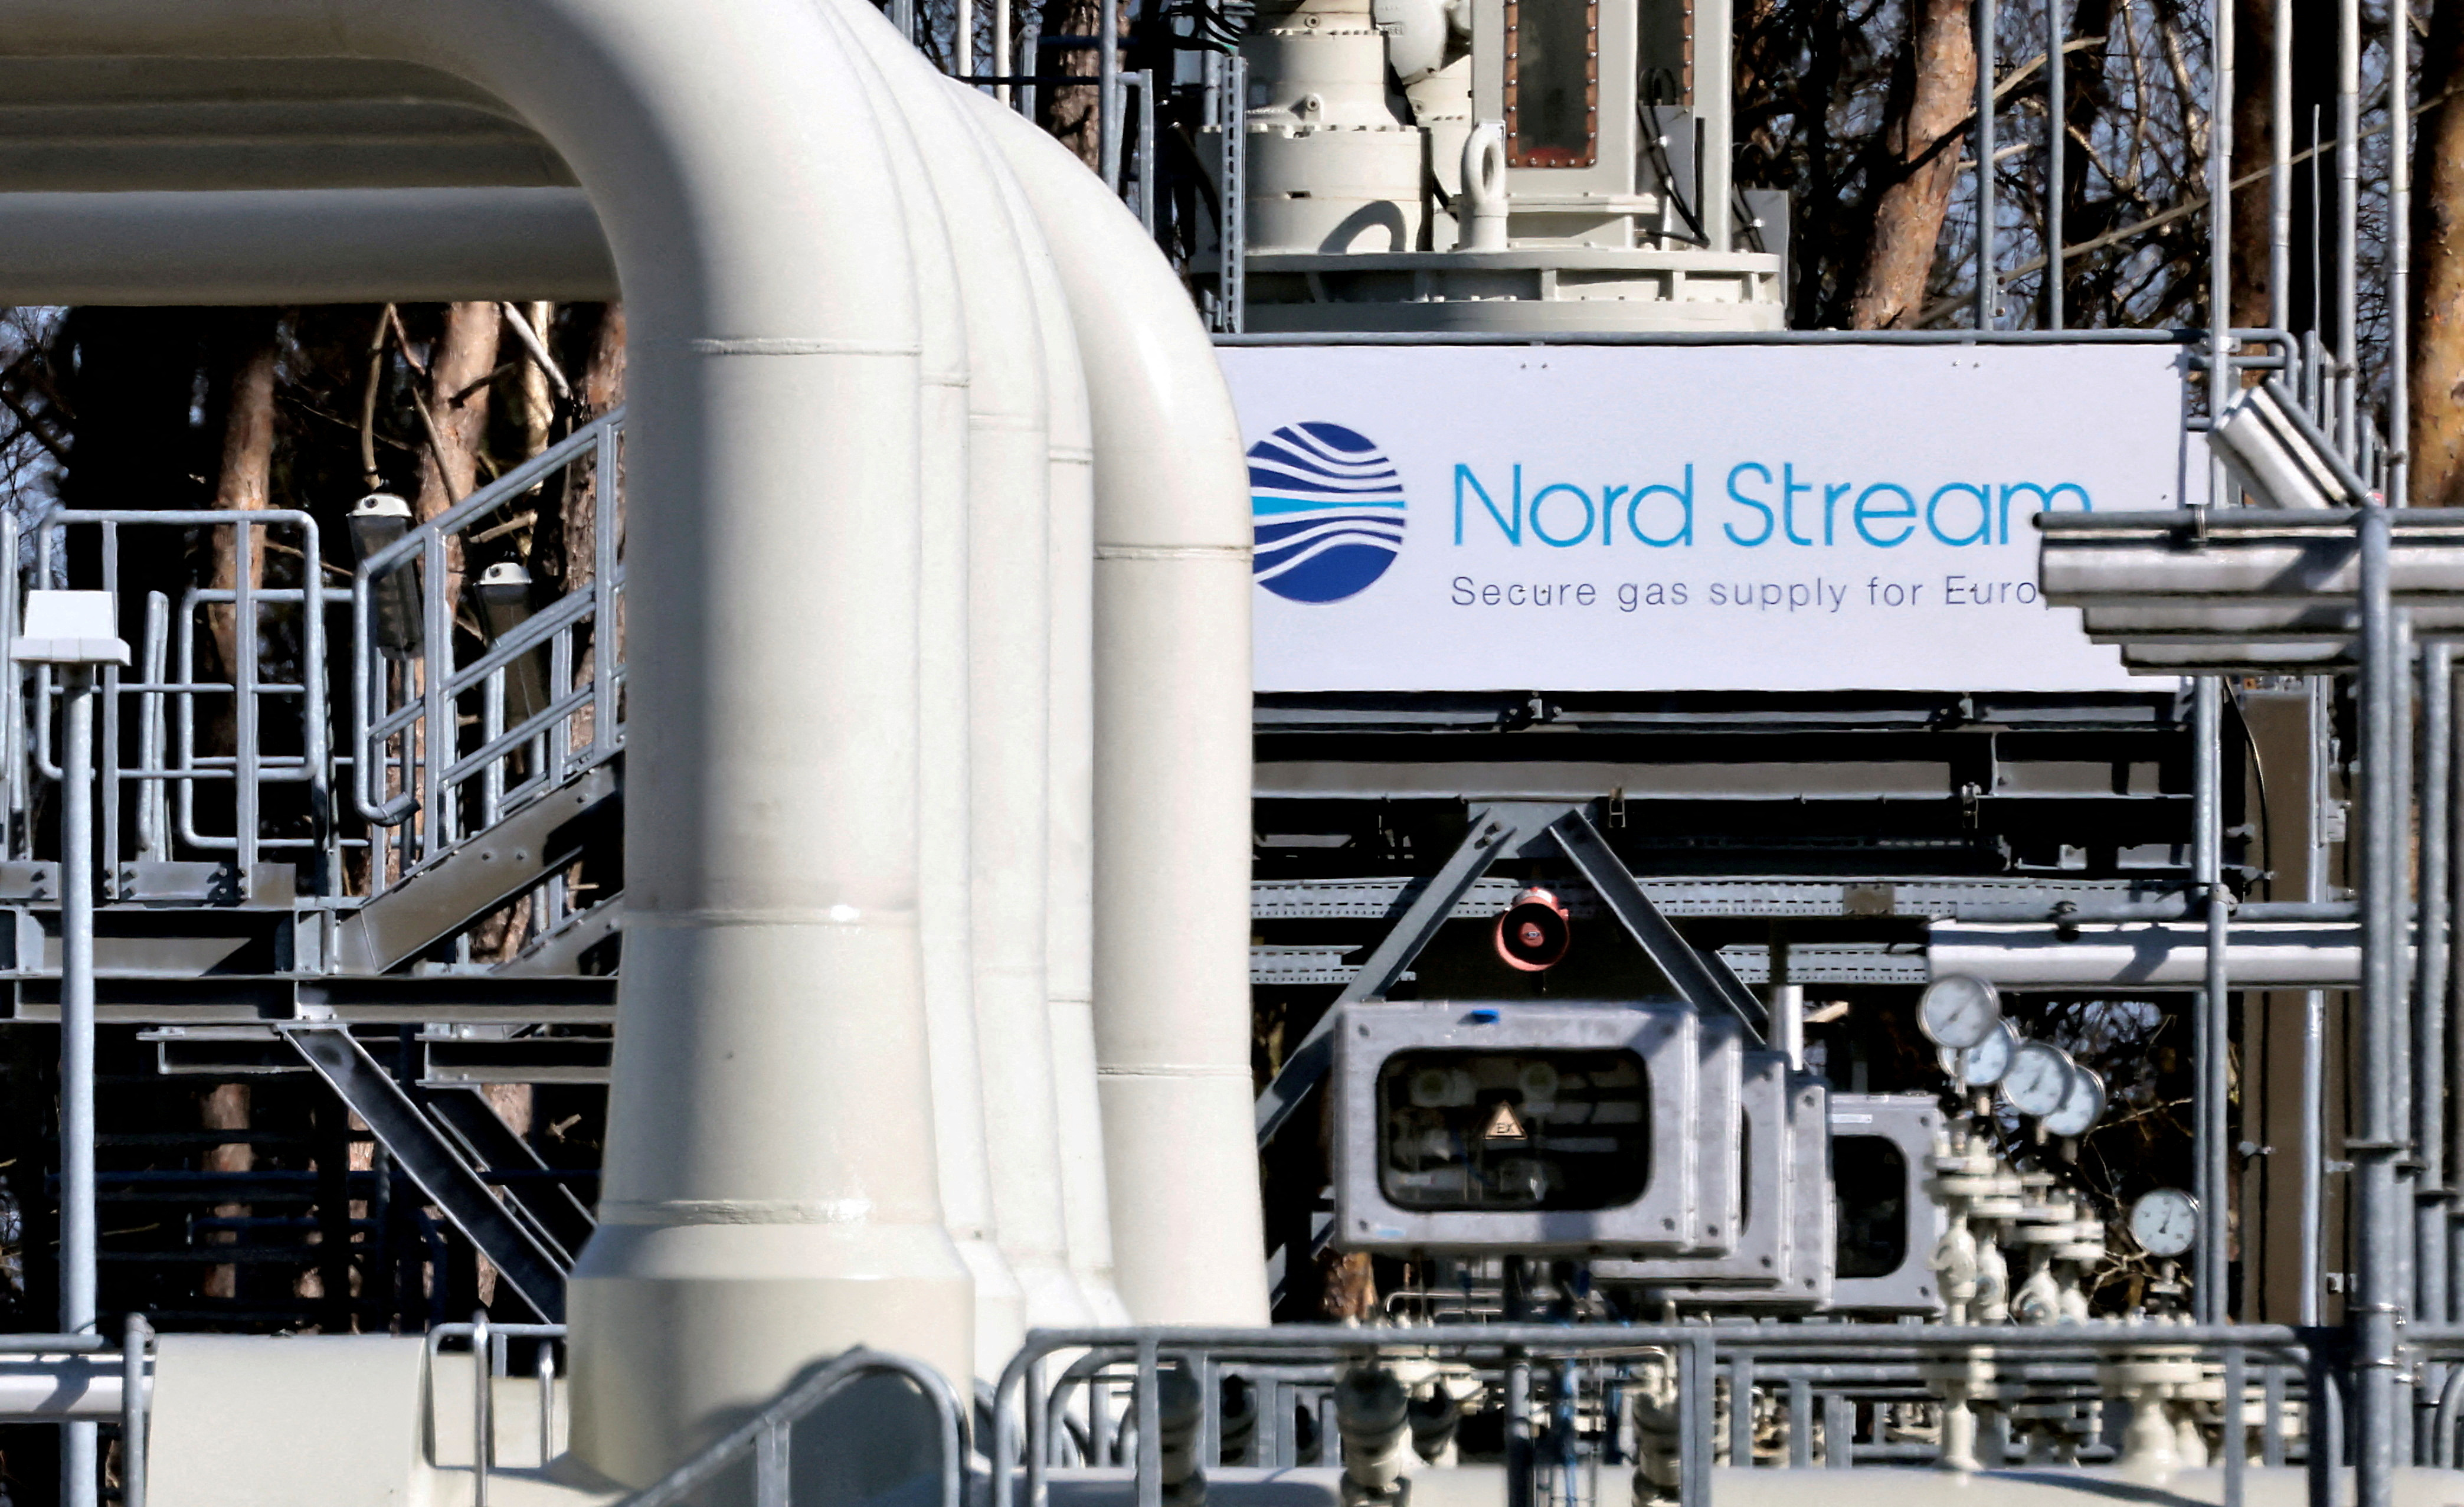 Nord Stream 1, le gazoduc qui fournit l'Europe, devrait reprendre ses livraisons jeudi